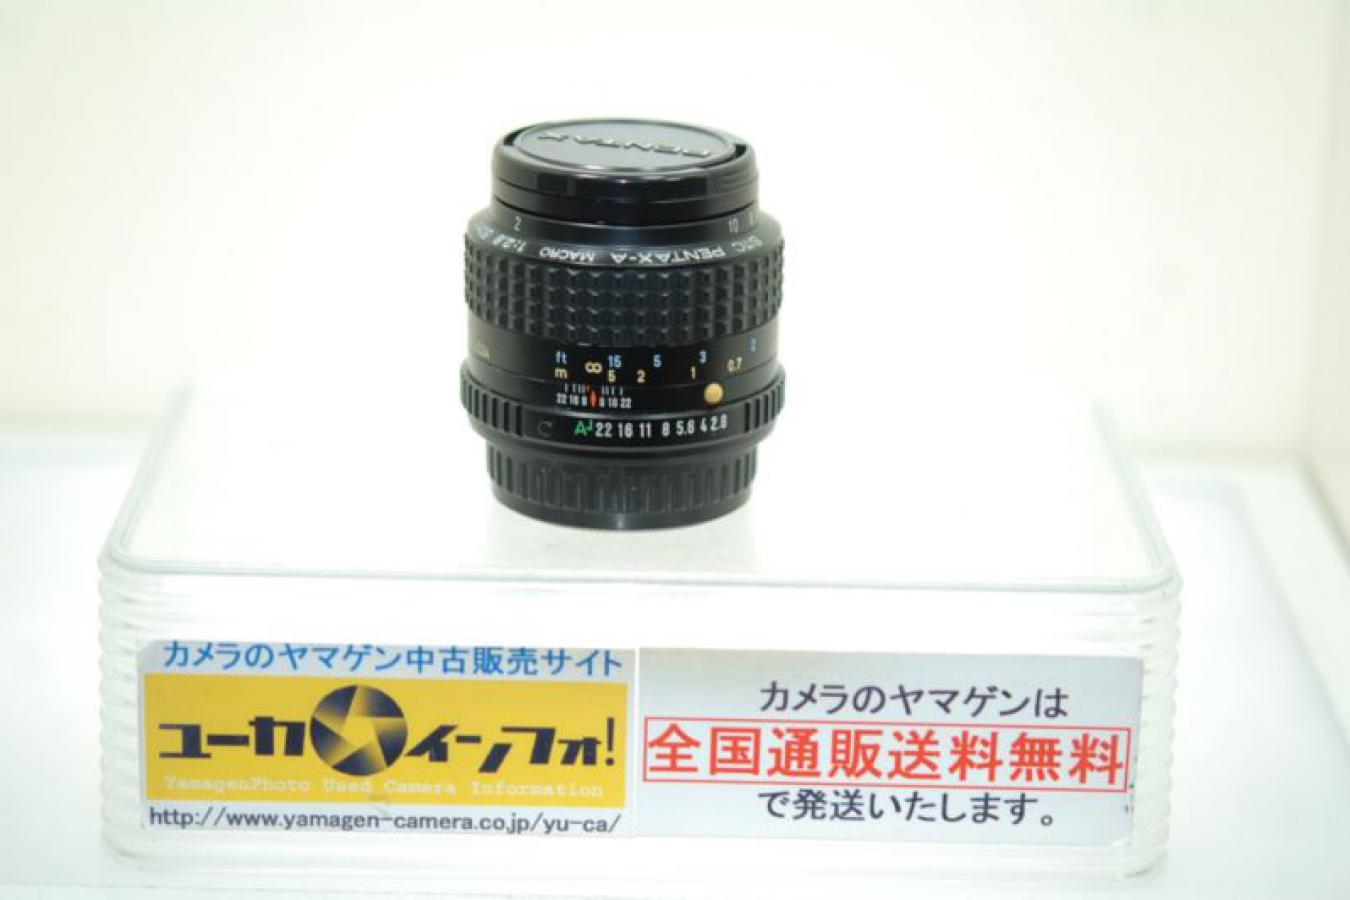 SMC PENTAX-A 50mm F2.8 マクロ | YAMAGEN CAMERA | カメラのヤマゲン